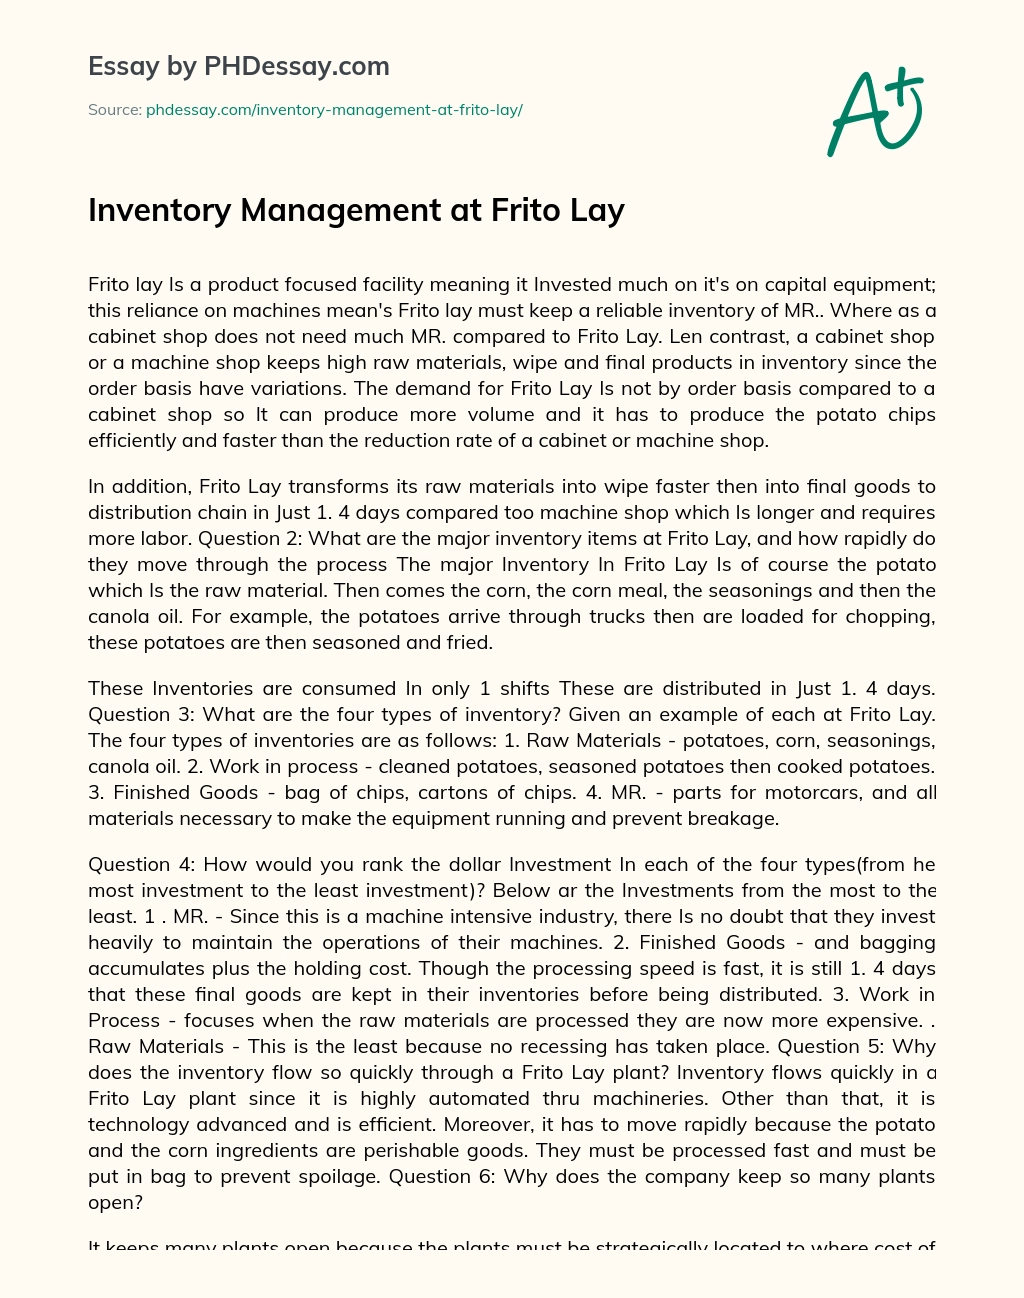 Inventory Management at Frito Lay essay